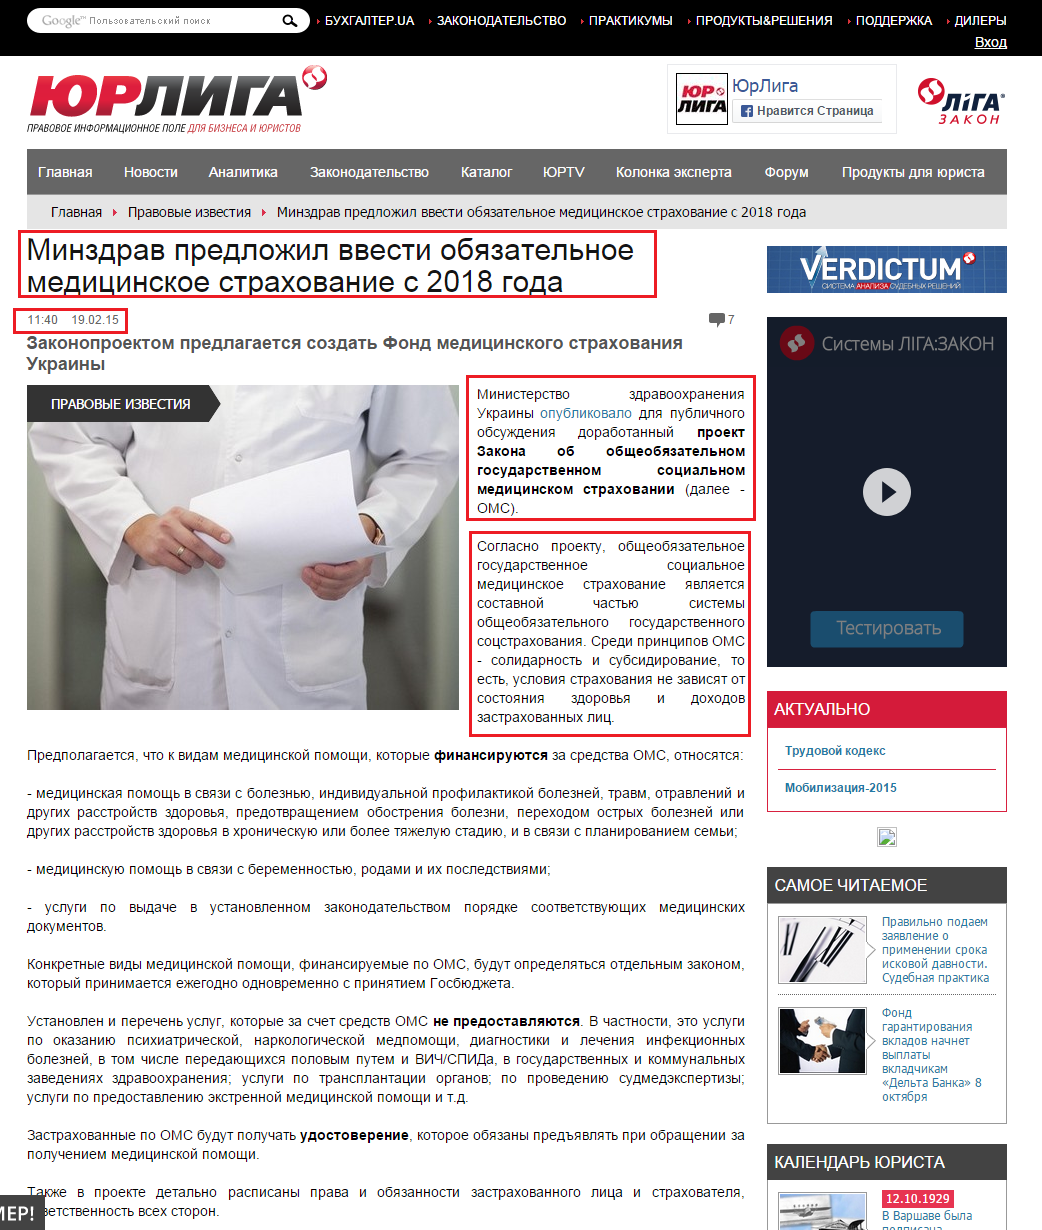 http://jurliga.ligazakon.ua/news/2015/2/19/124588.htm